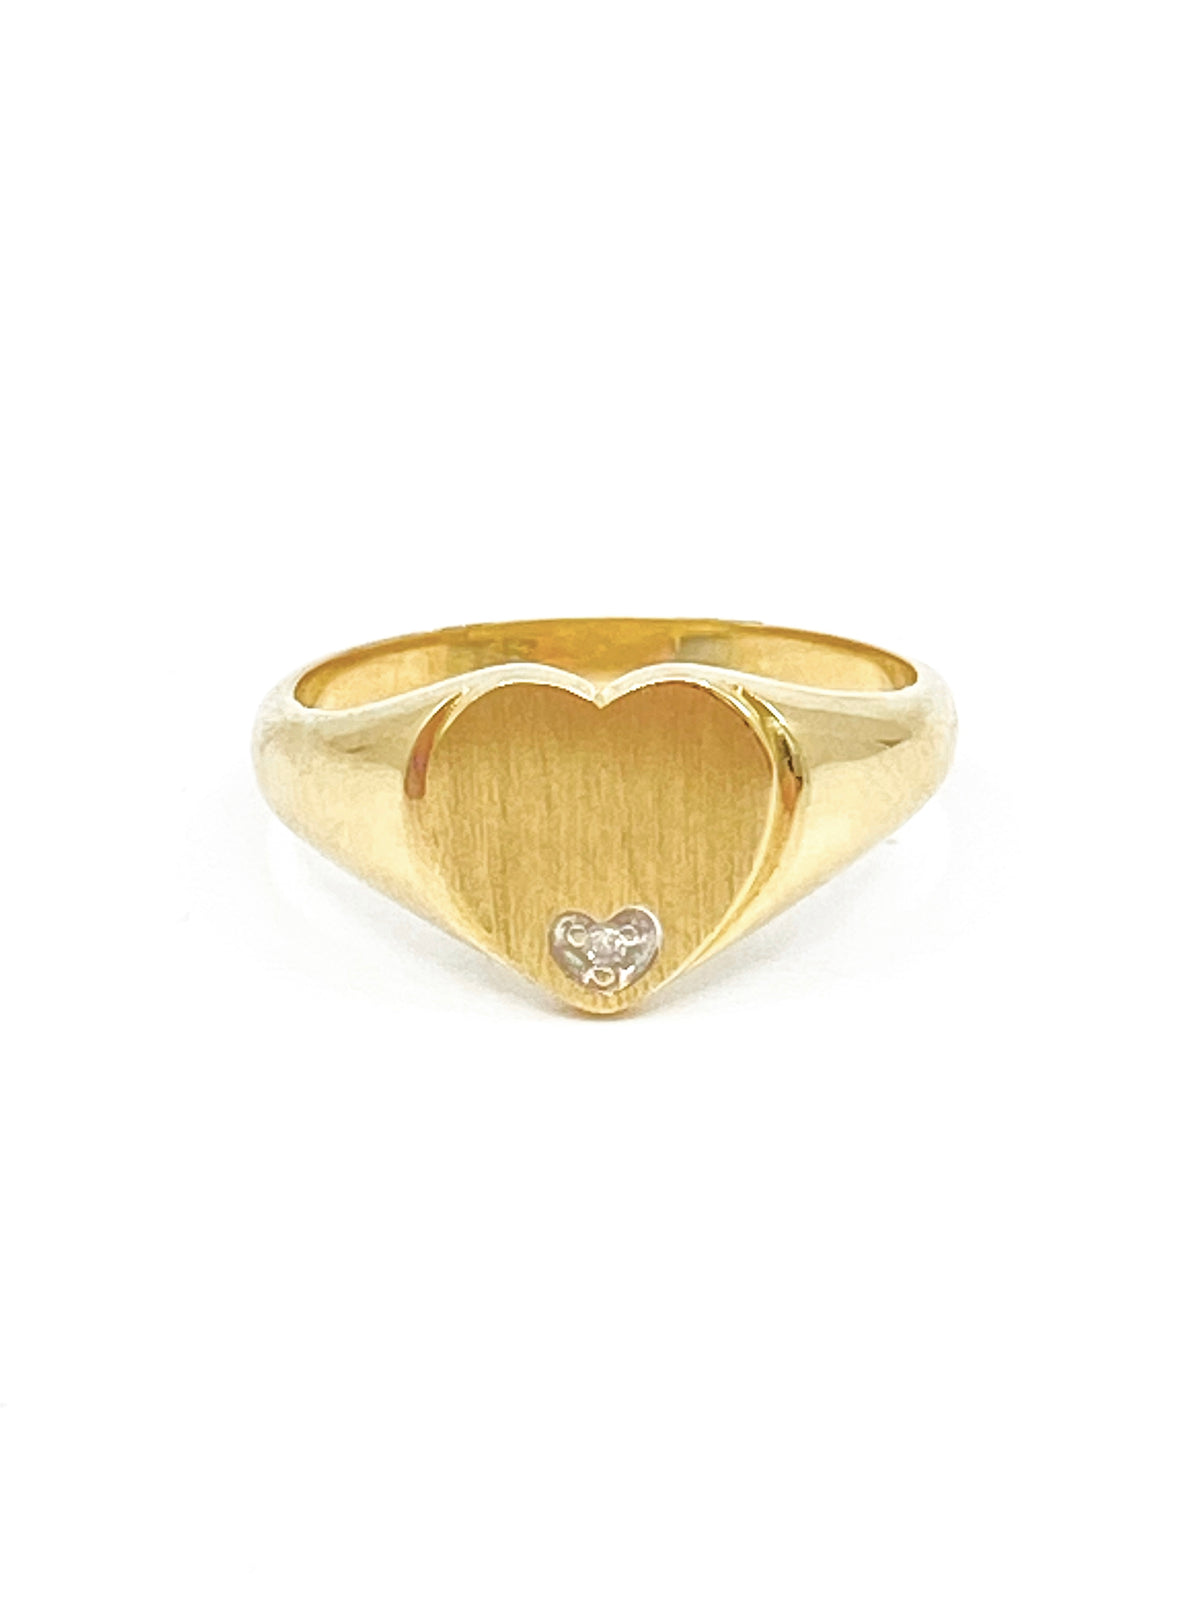 10K Yellow Gold 0.007 Diamond Heart Shape Signet Ring, size 6